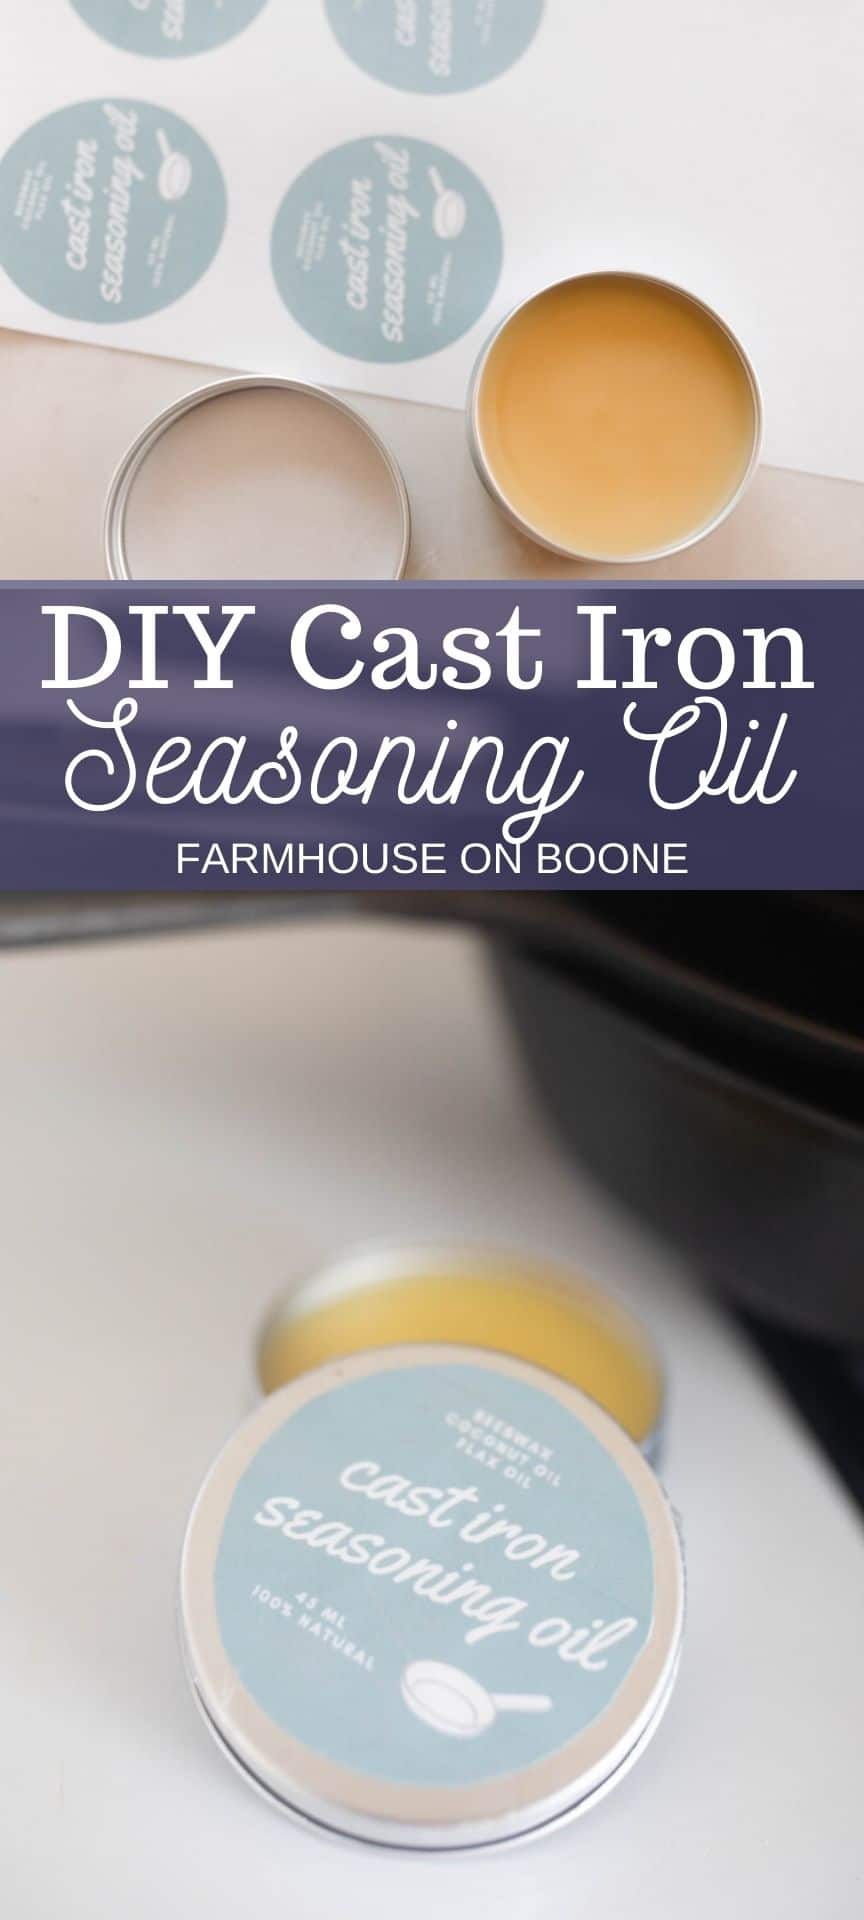 https://www.farmhouseonboone.com/wp-content/uploads/2021/03/DIY-Cast-Iron-Seasoning-Oil-5.jpg